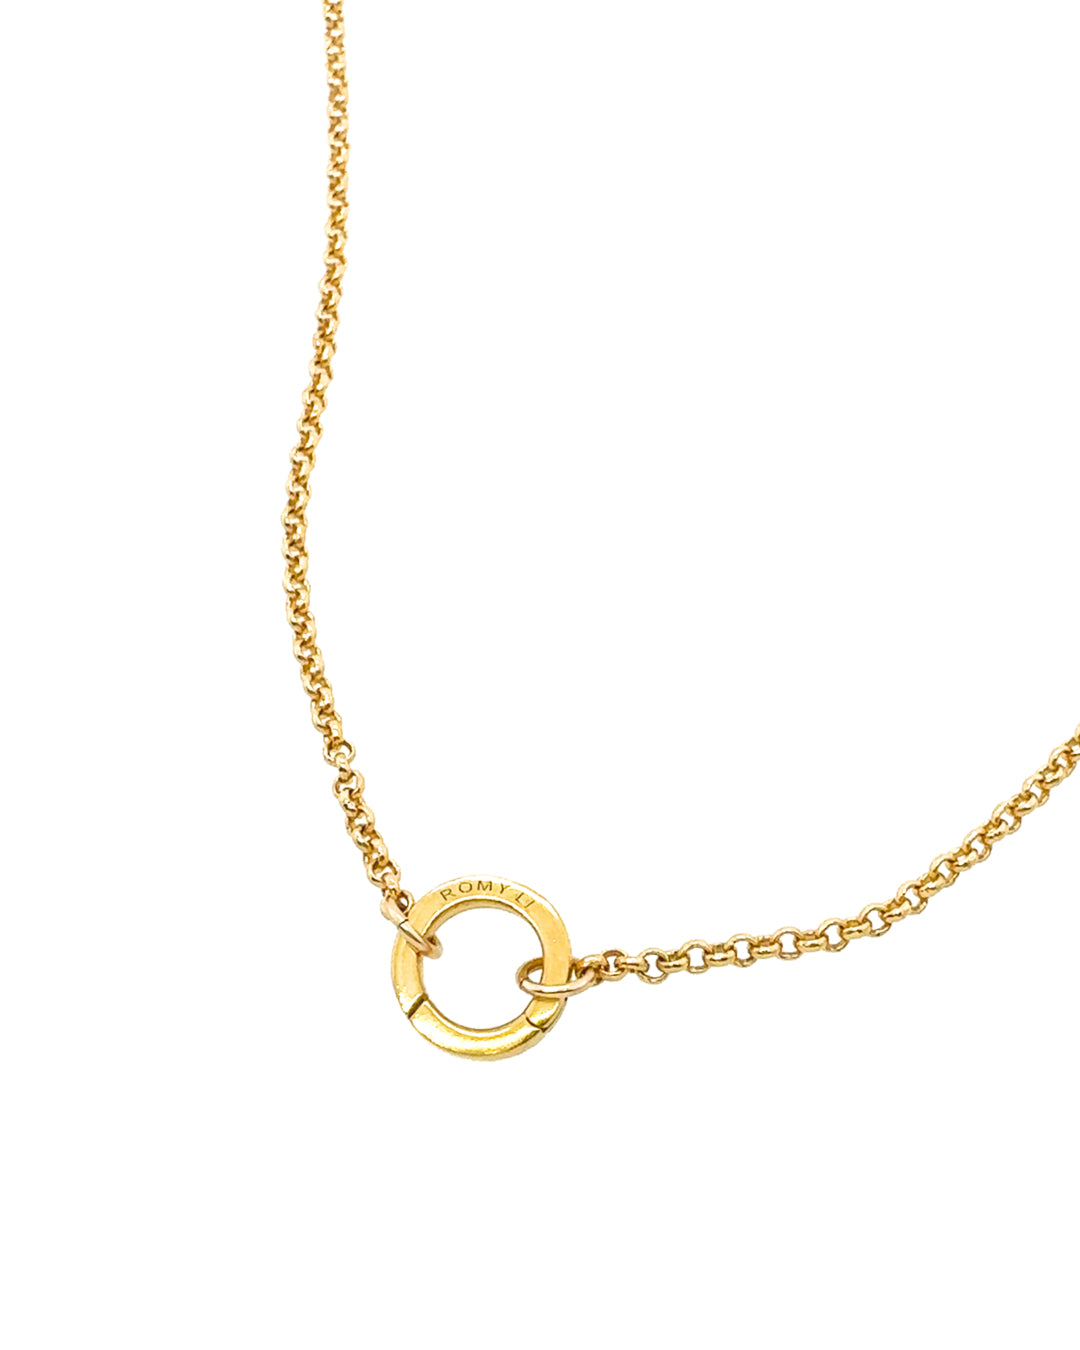 Gold petite Rolo annex link clasp necklace chain 